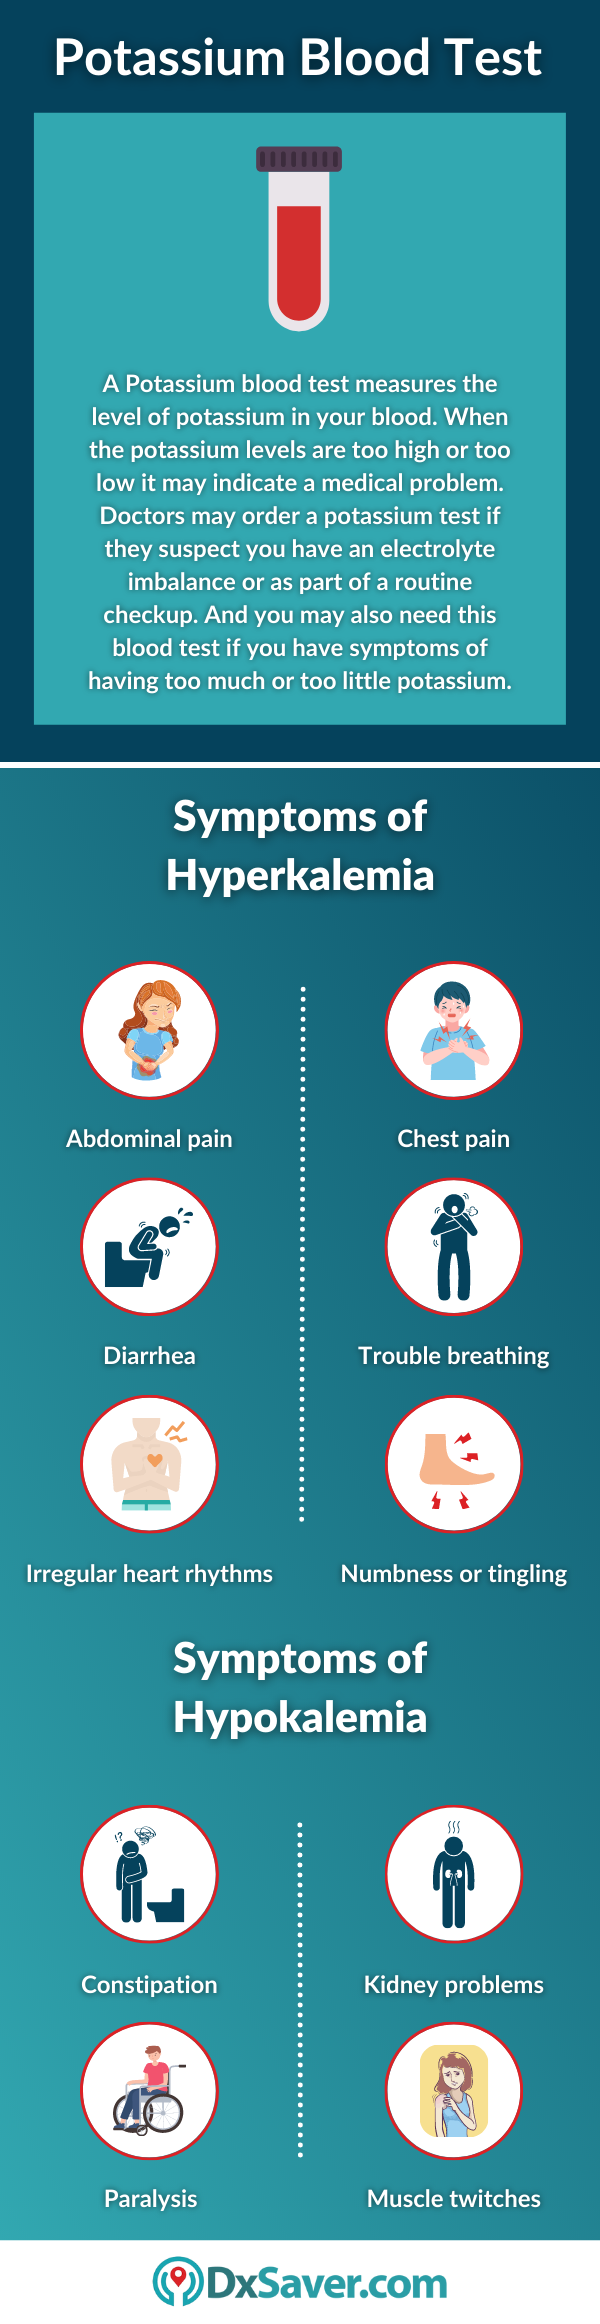 Potassium Blood Test and Symptoms of Hyperkalemia & Hypokalemia